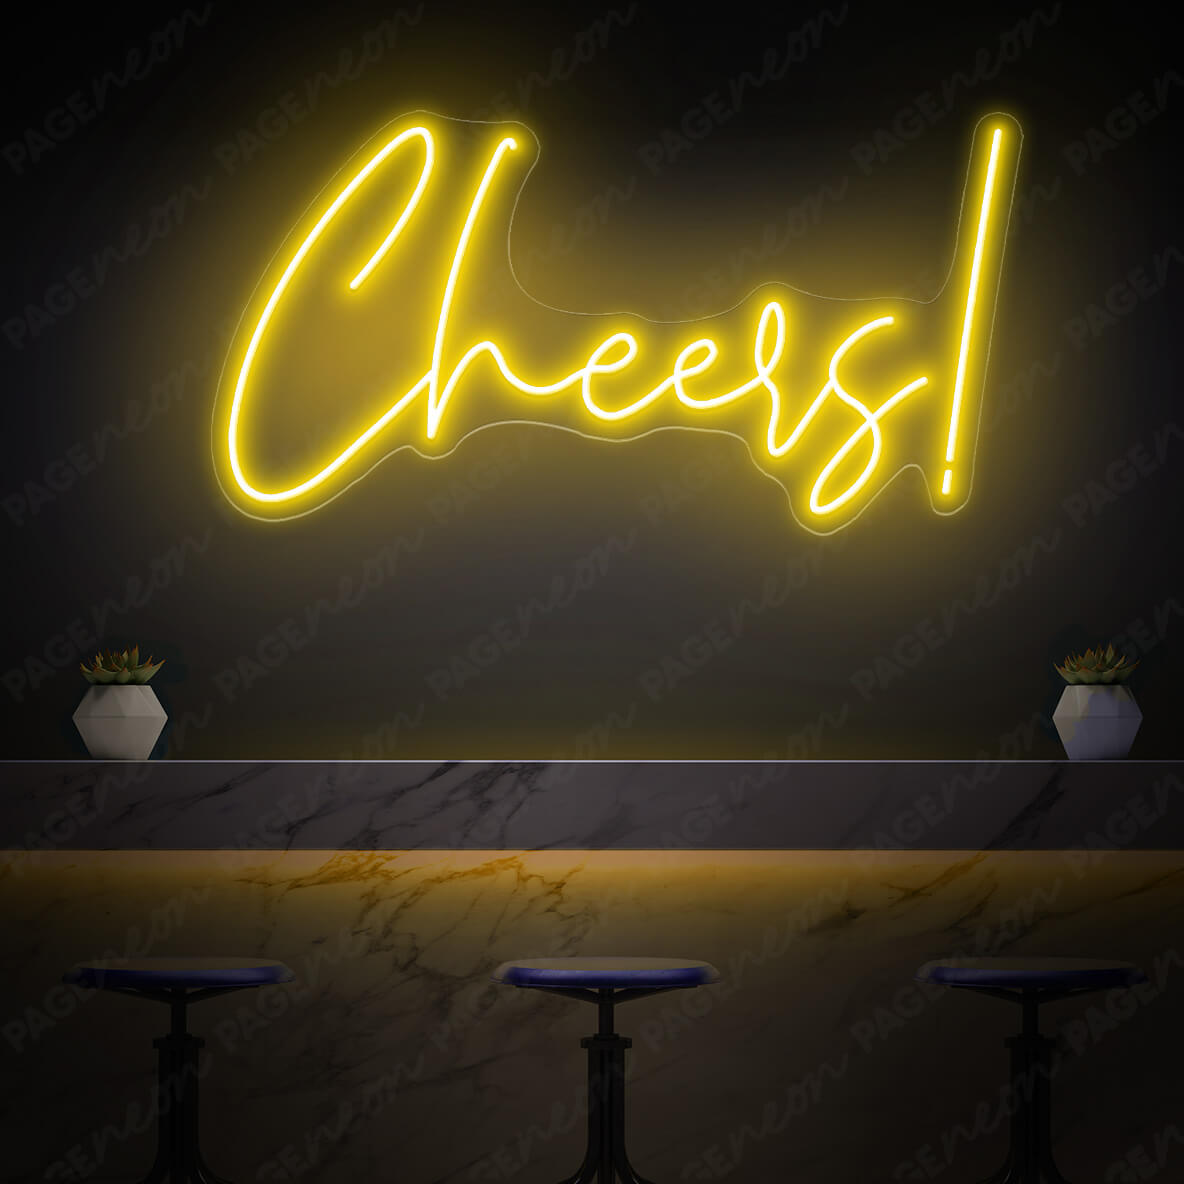 Cheers Neon Sign Bar Led Light Yellow